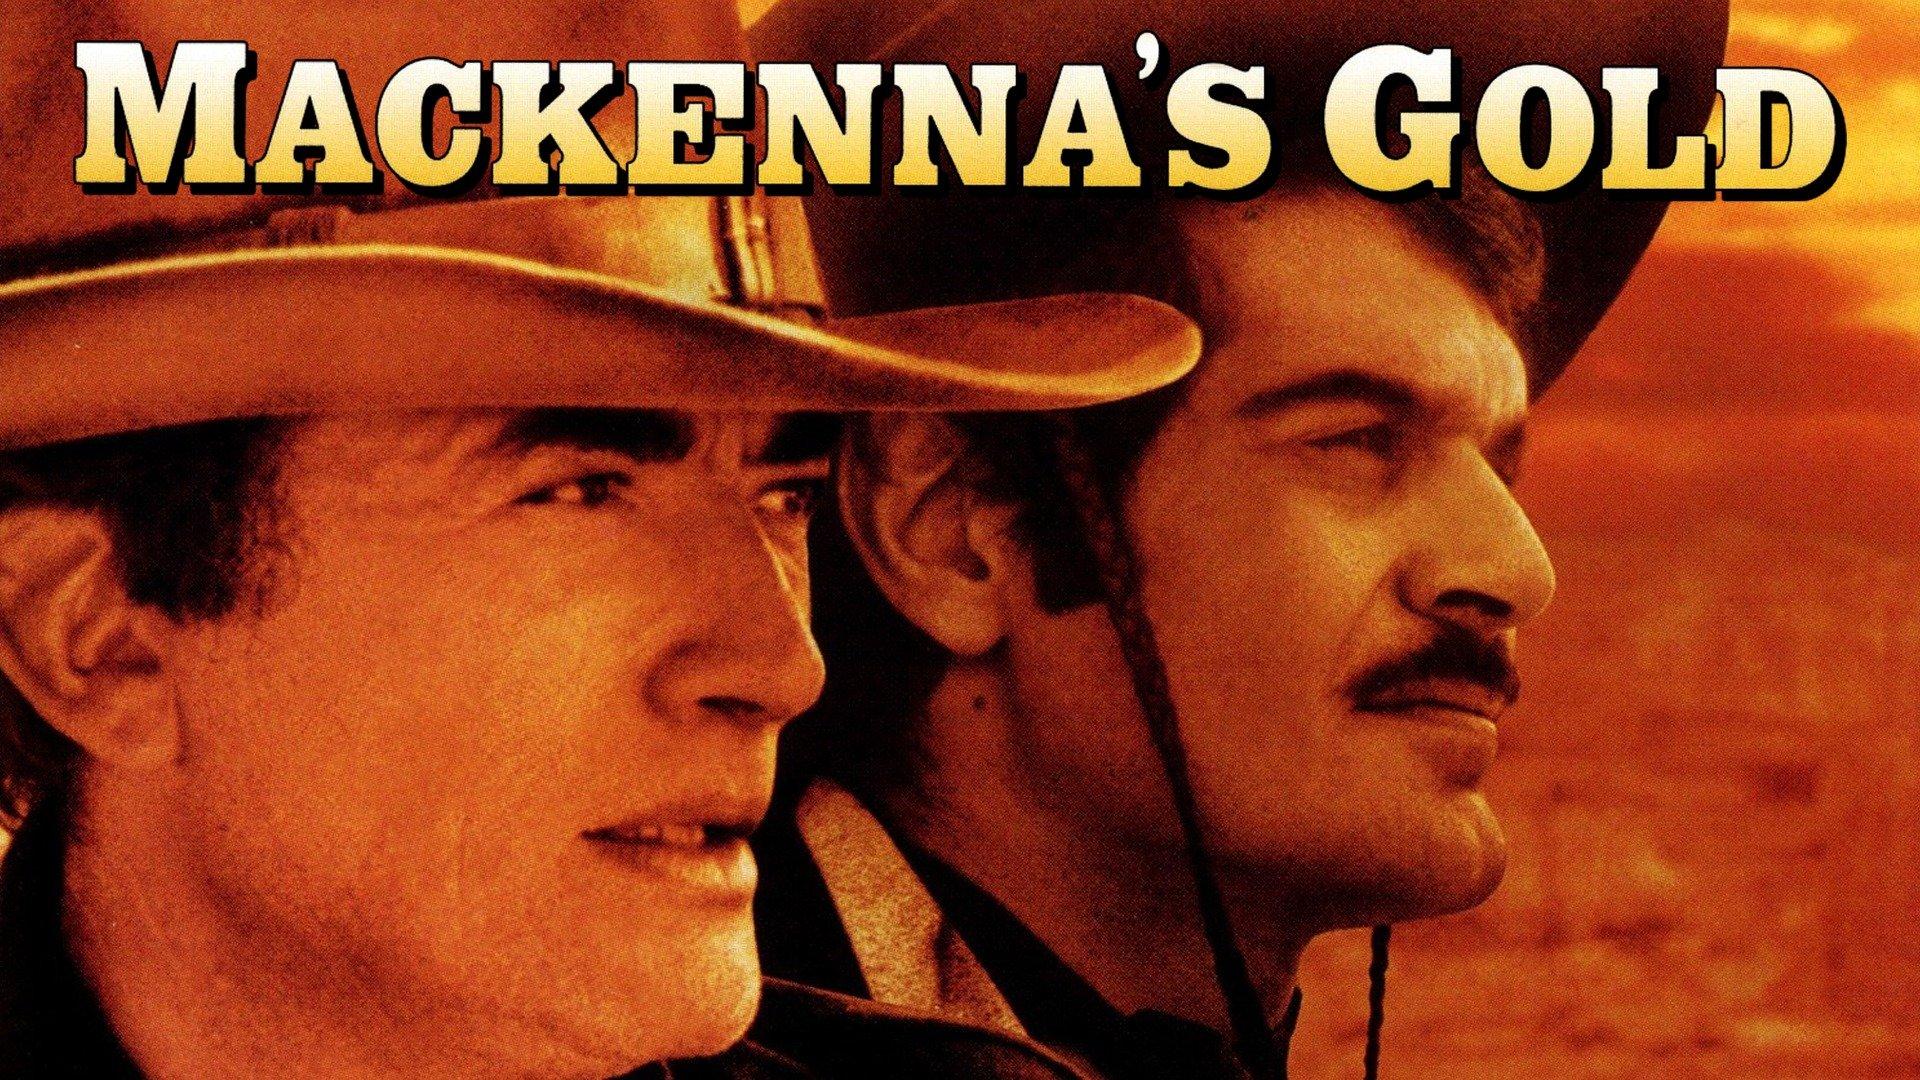 Ободзинский песни золото маккены. Mackenna's Gold 1969. Золото Маккены песня Ободзинский. Mackenna's Gold, 1969 Cover.